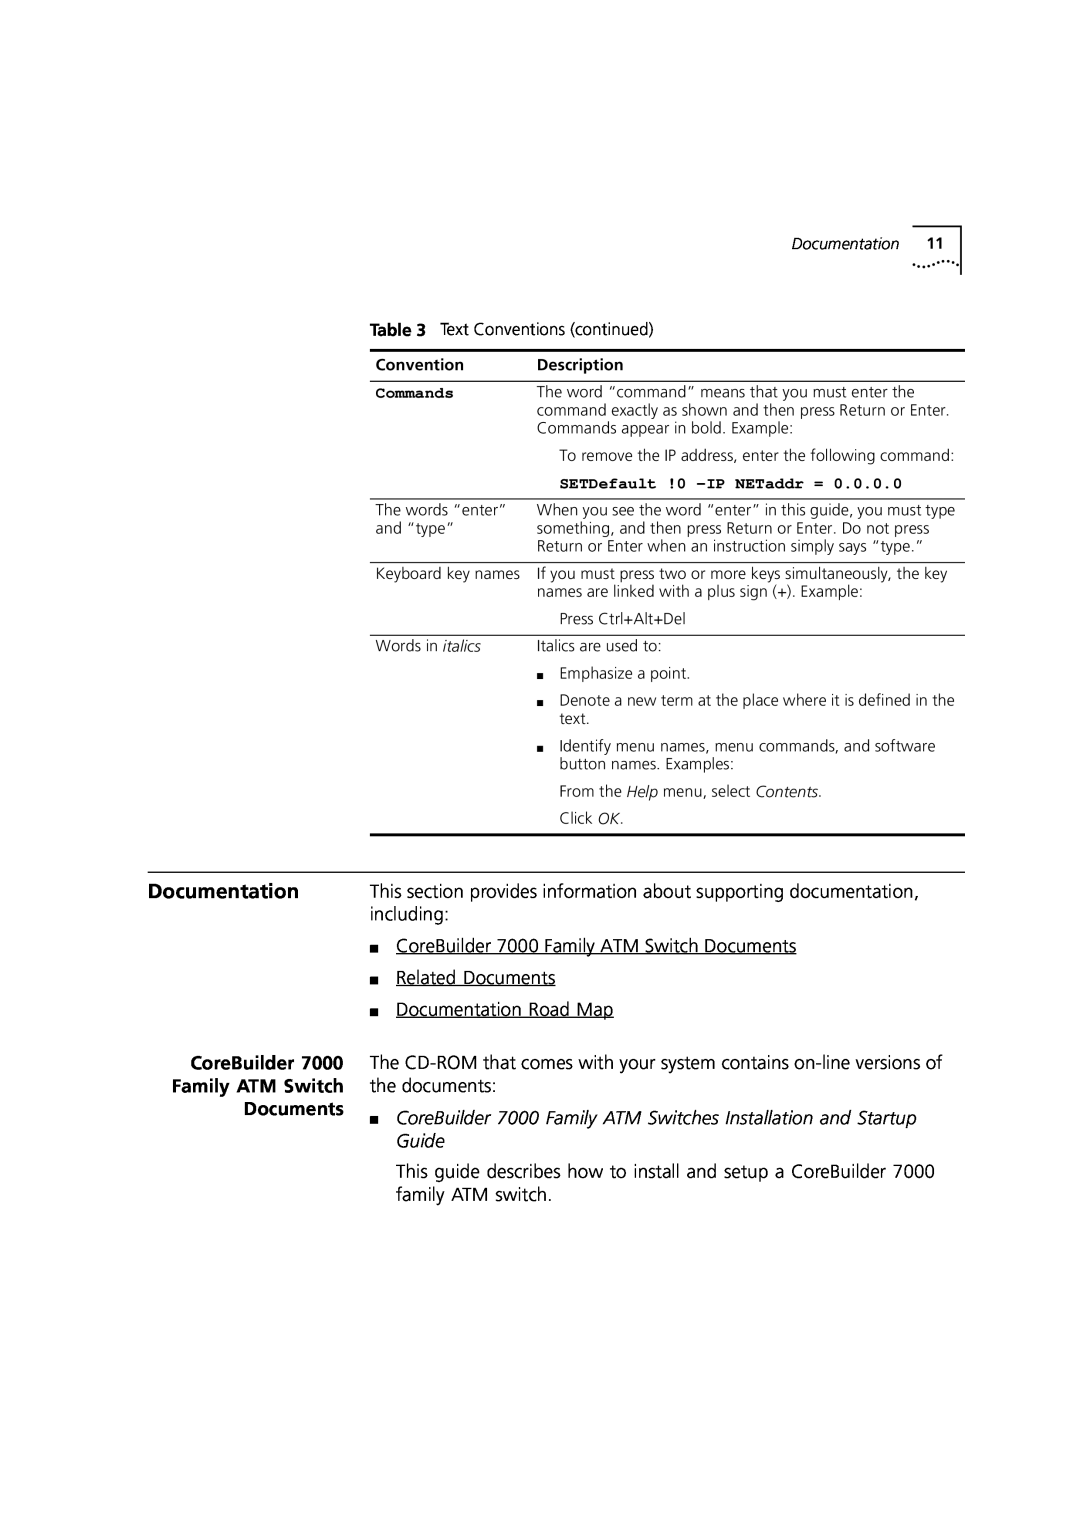 3Com 7000 manual Documentation, CoreBuilder Family ATM Switch Documents 